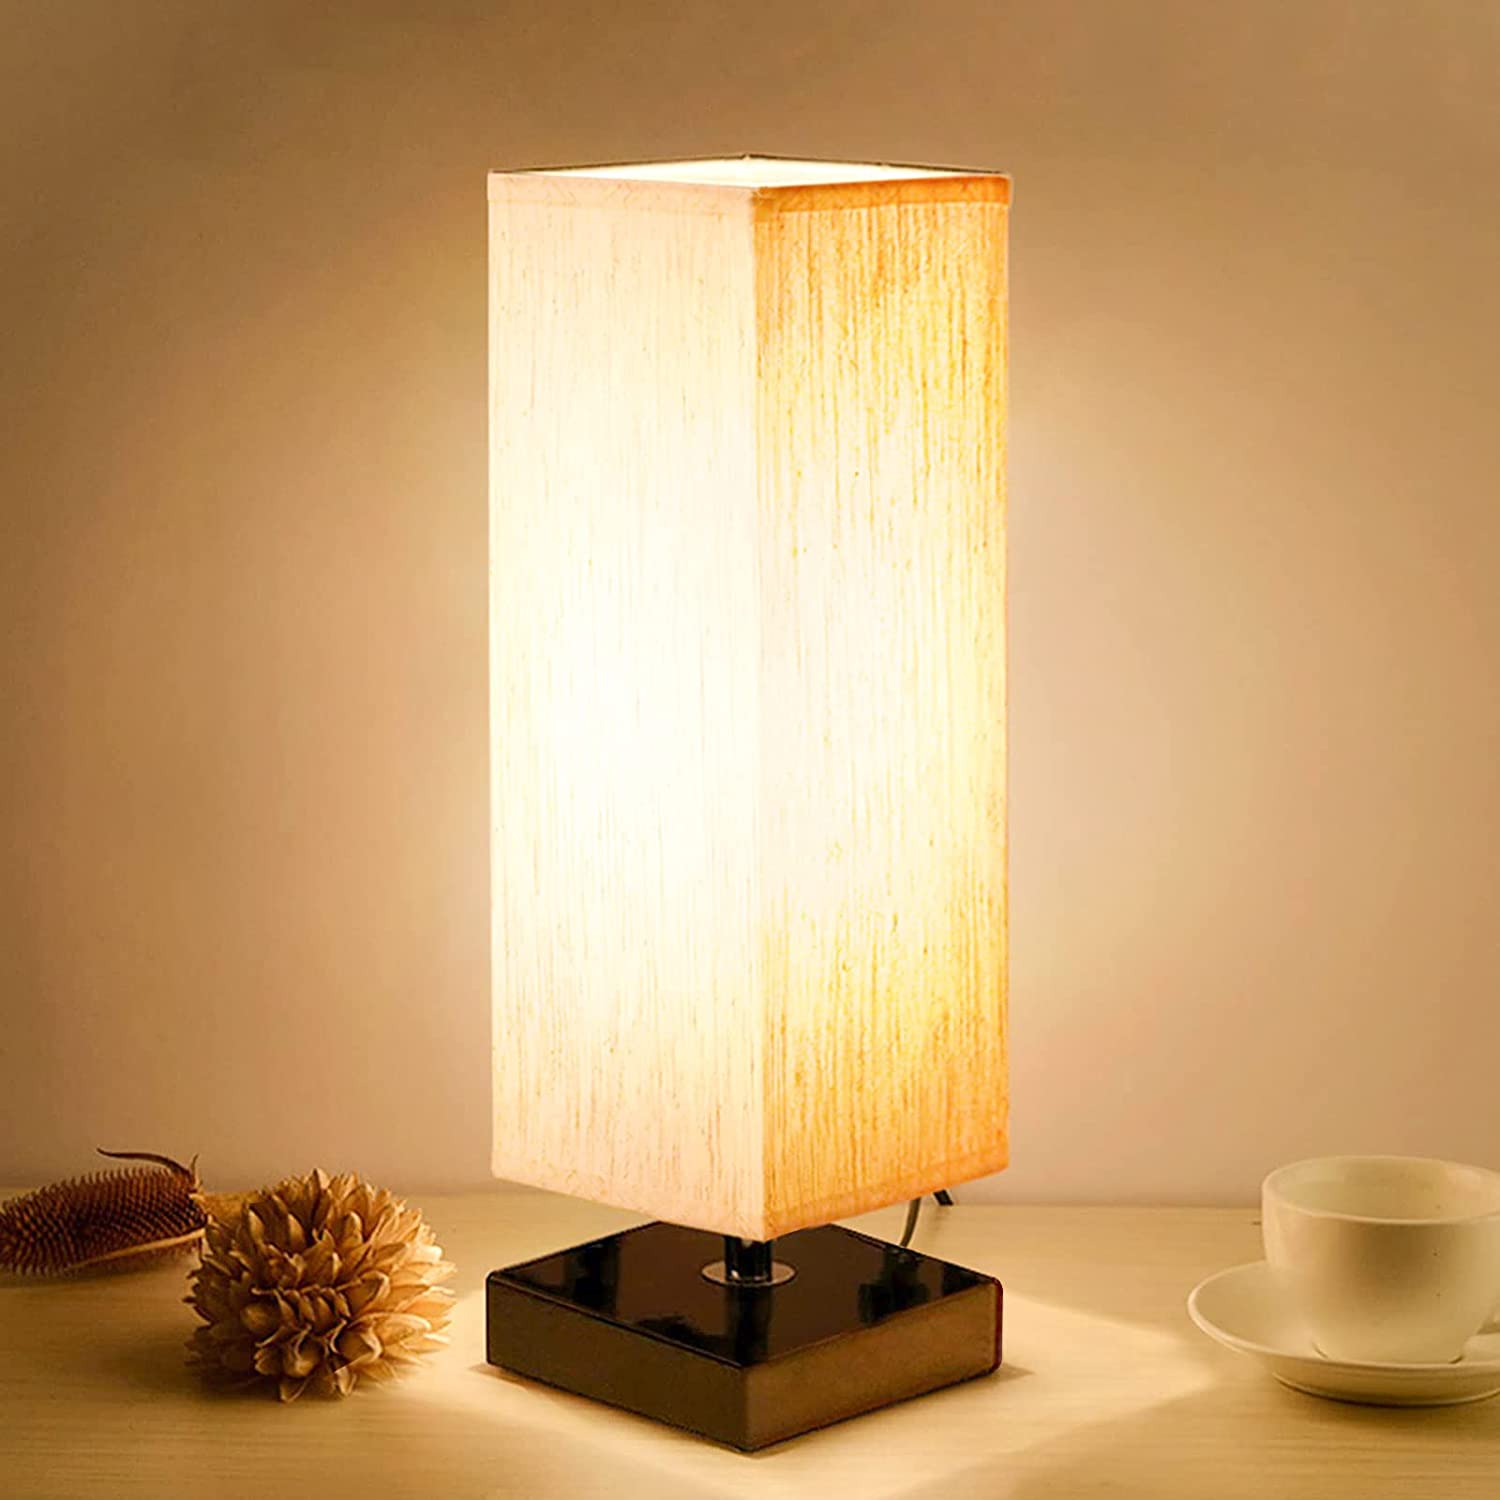 Aooshine minimalist solid wood bedside table lamp